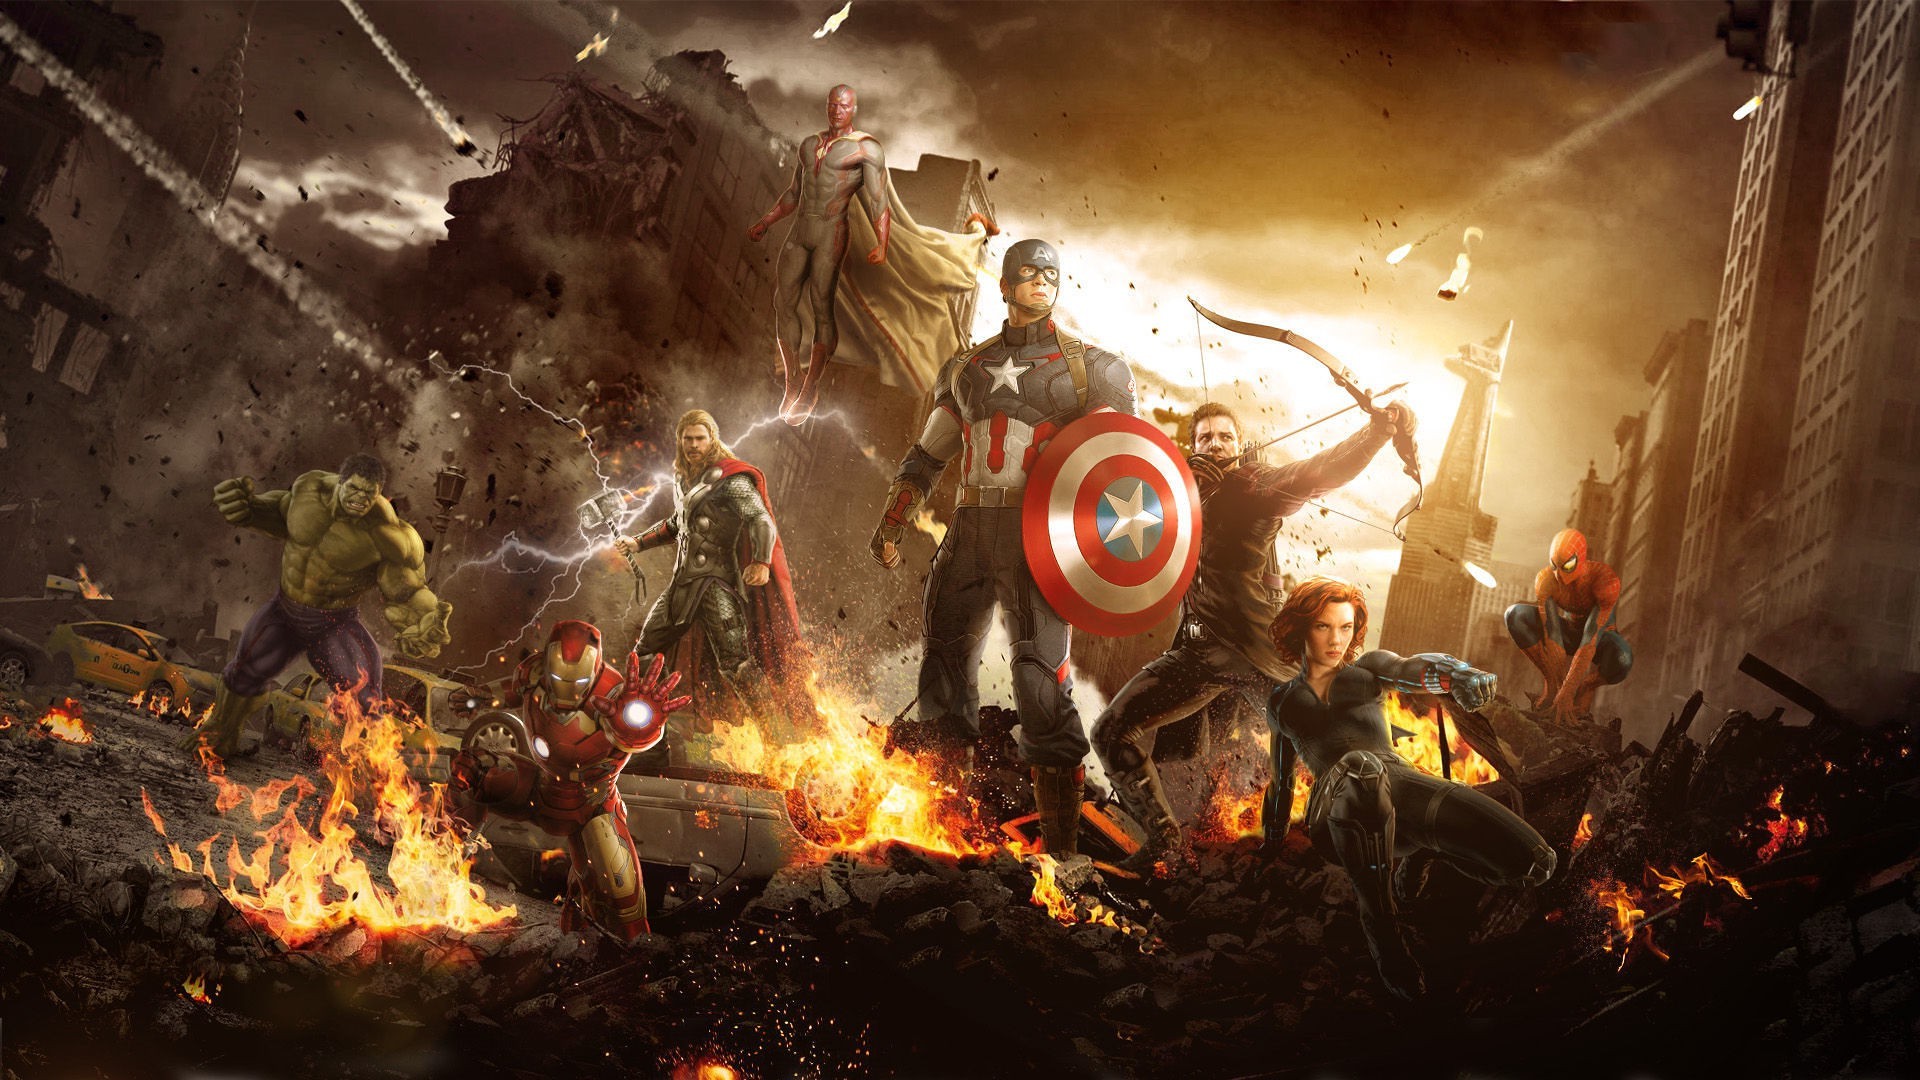 The Avengers, Movies, Iron Man, Hulk, Thor, Scarlett Johansson, Black Widow, Hawkeye, Captain America, Spider Man, The Vision, Avengers: Age Of Ultron Wallpaper